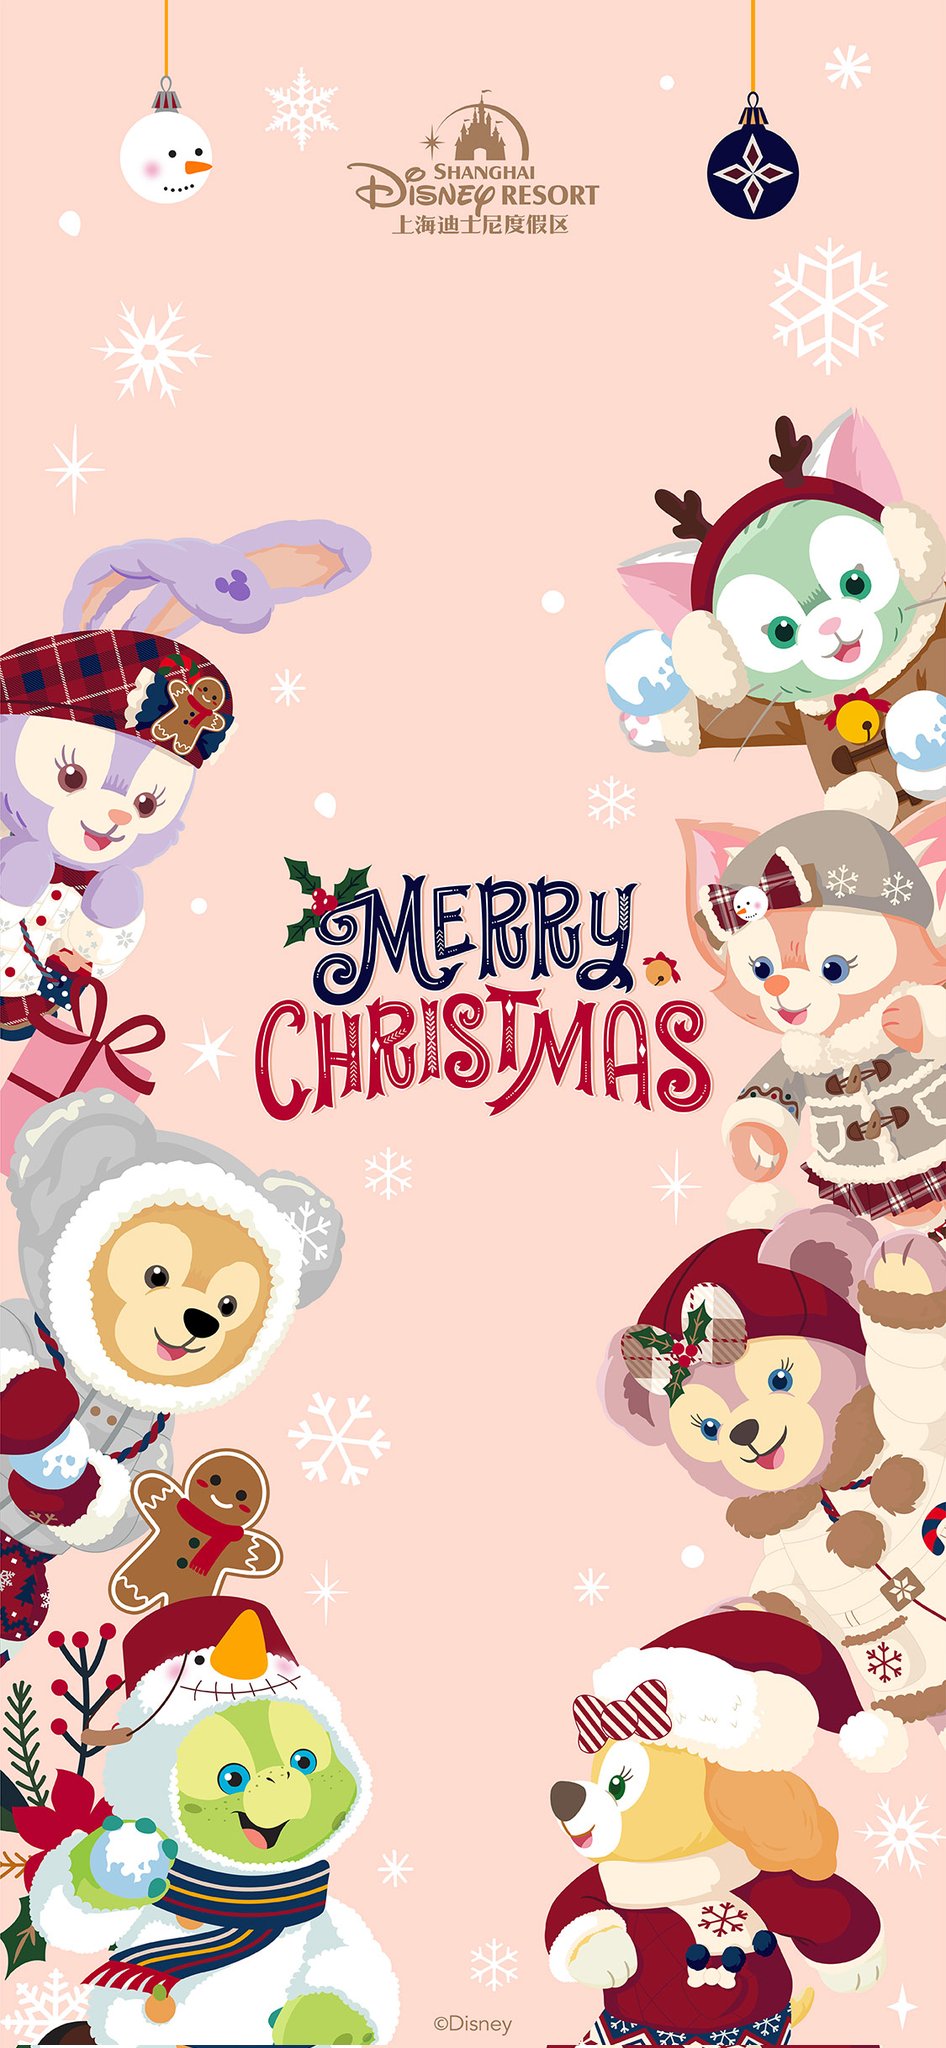 تويتر Tomoko على تويتر 上海ディズニーランド 公式wechatより ダッフィーたちのクリスマス 公式さんからスマホ壁紙プレゼント ダッフィー シェリーメイ ジェラトーニ ステラ ルー オルメル リーナ ベル クッキーアン